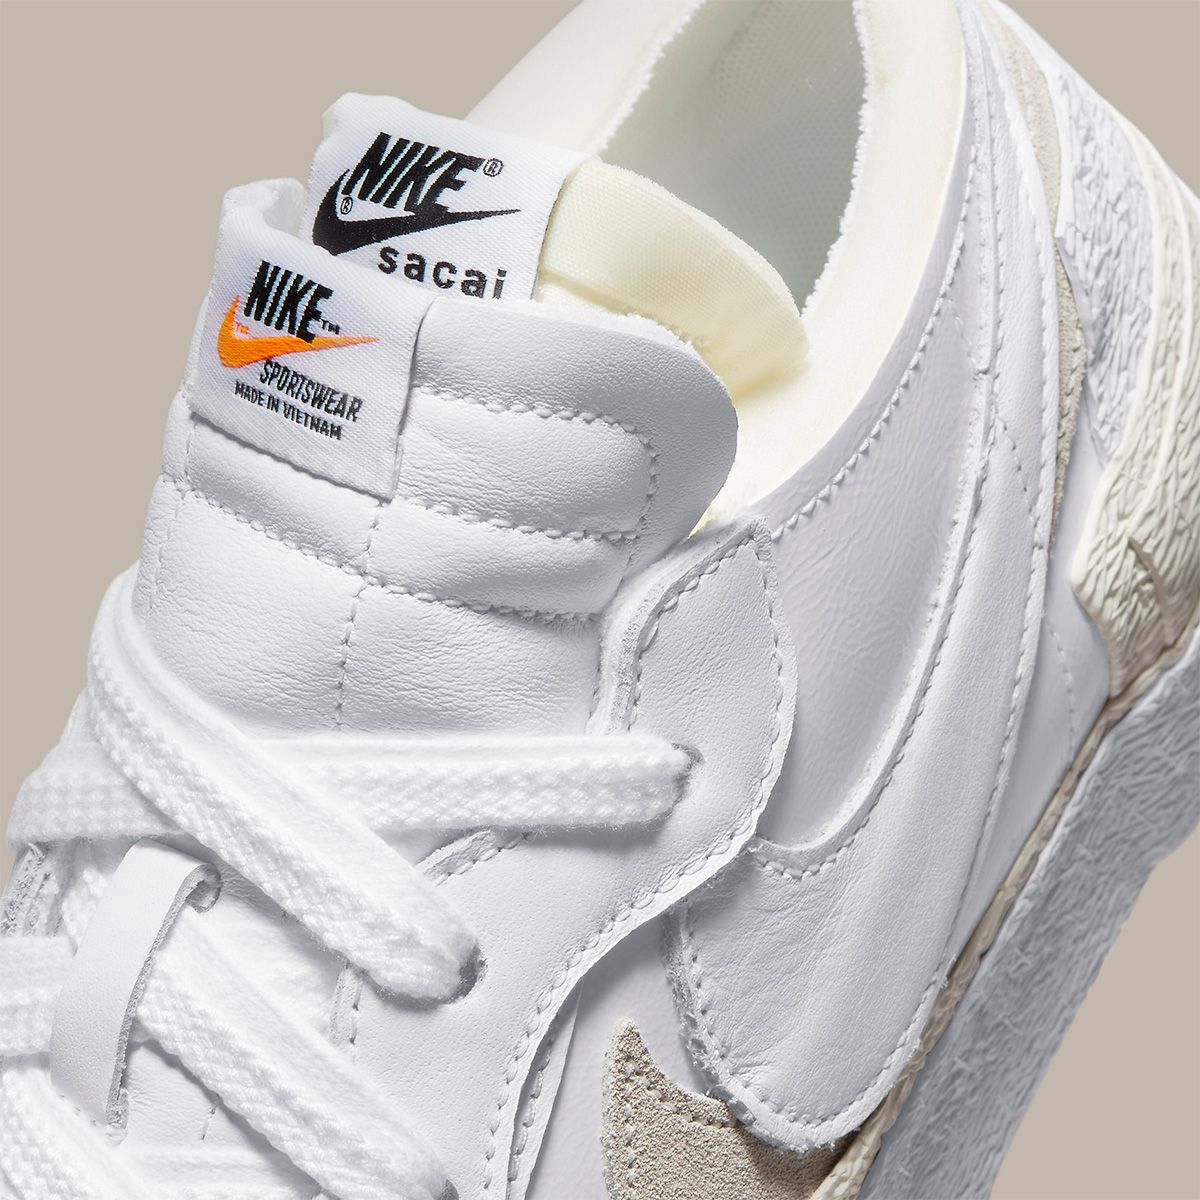 Where to Buy the sacai x Nike Blazer Low 